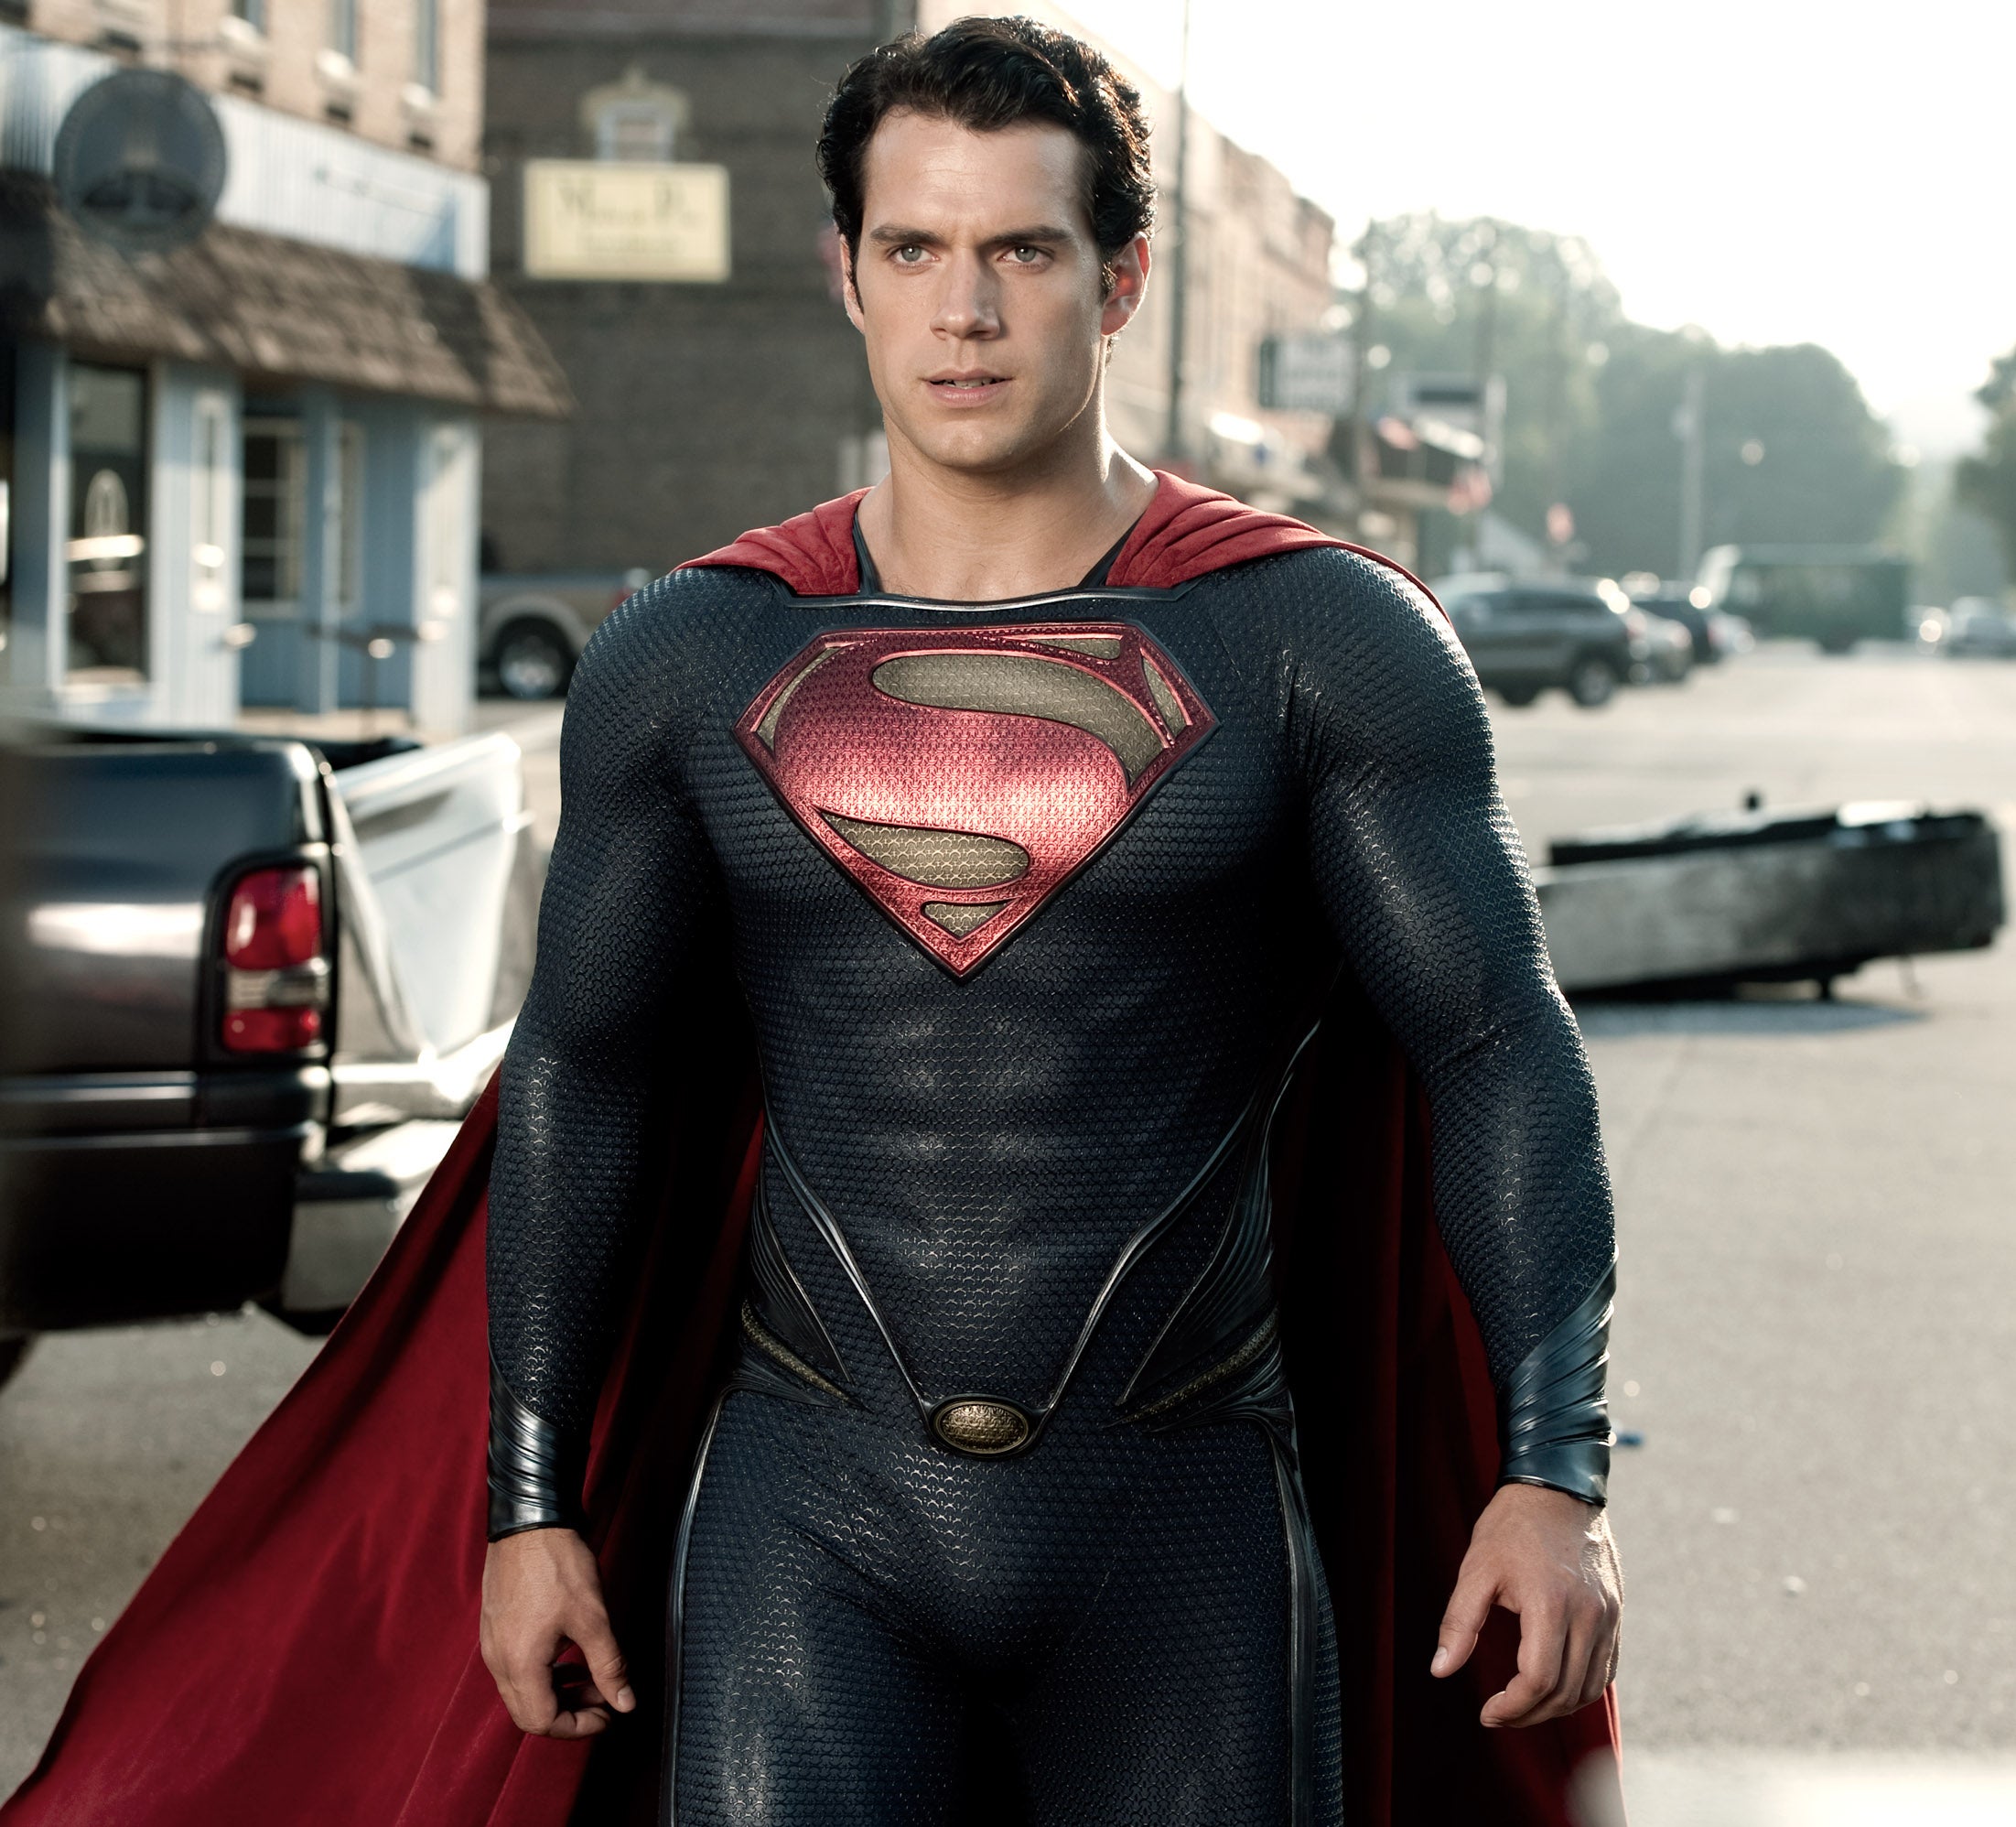 Batman vs Superman costumes: Crotch must be 'appealing but non